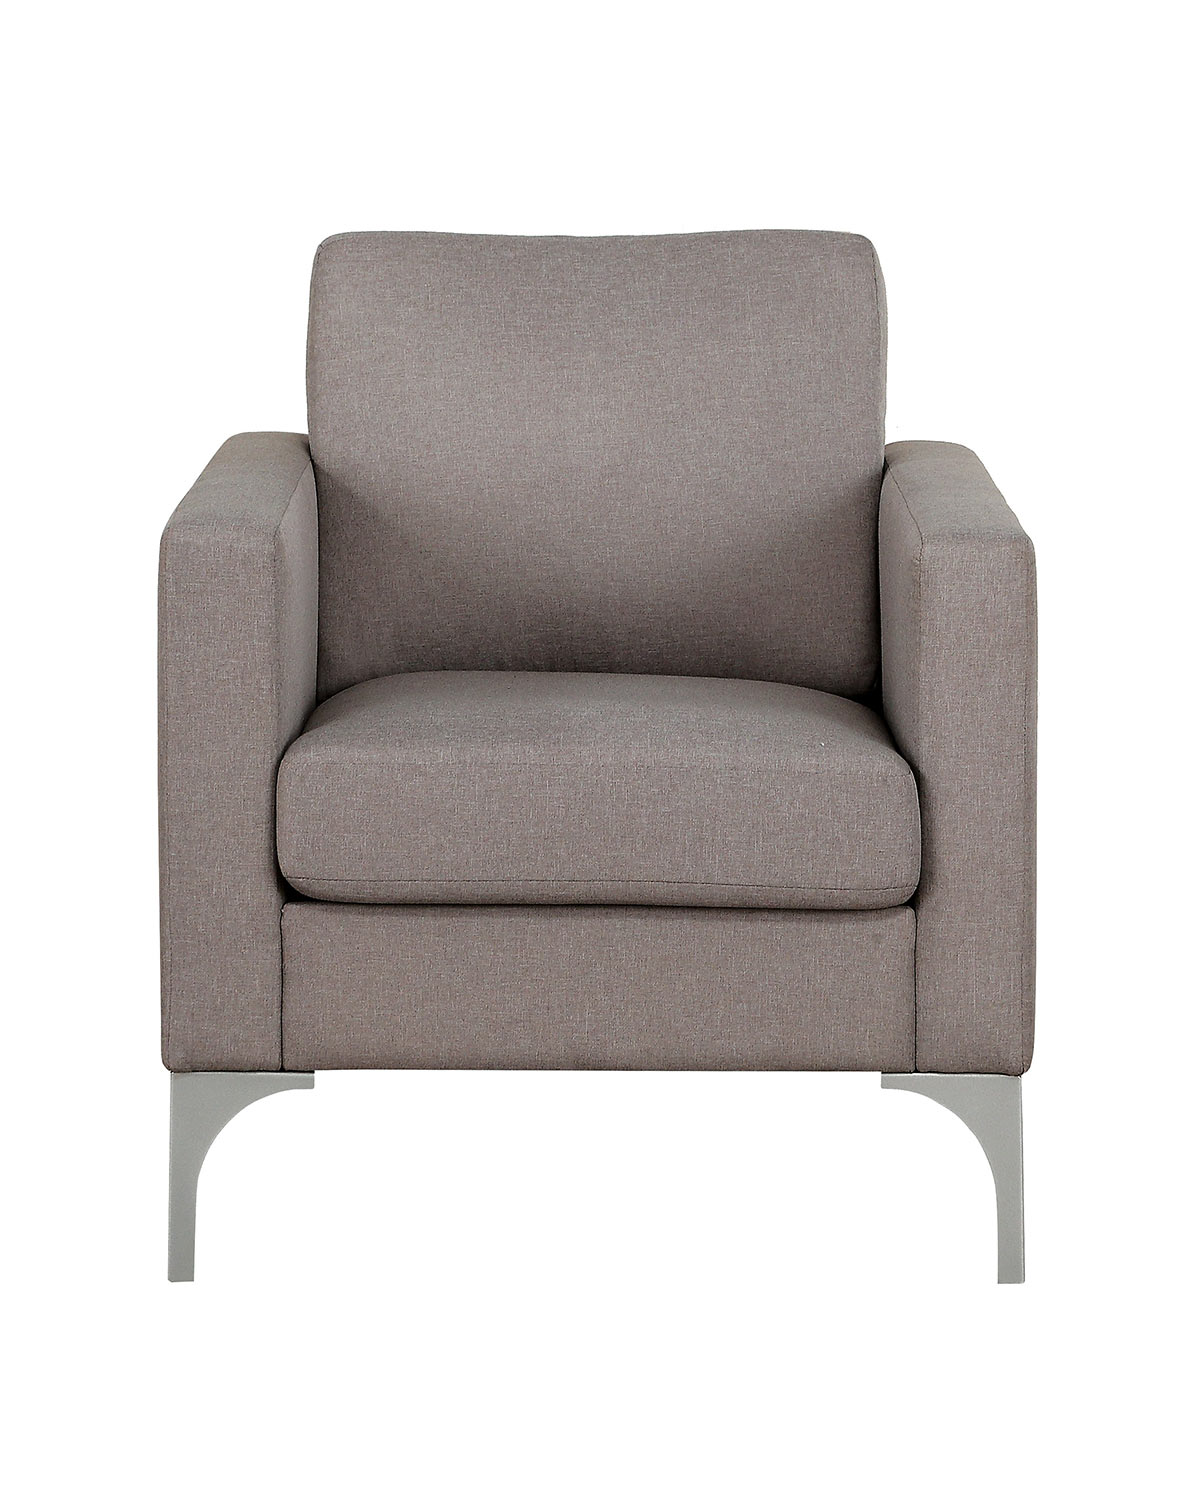 Homelegance Soho Chair - Brownish Gray